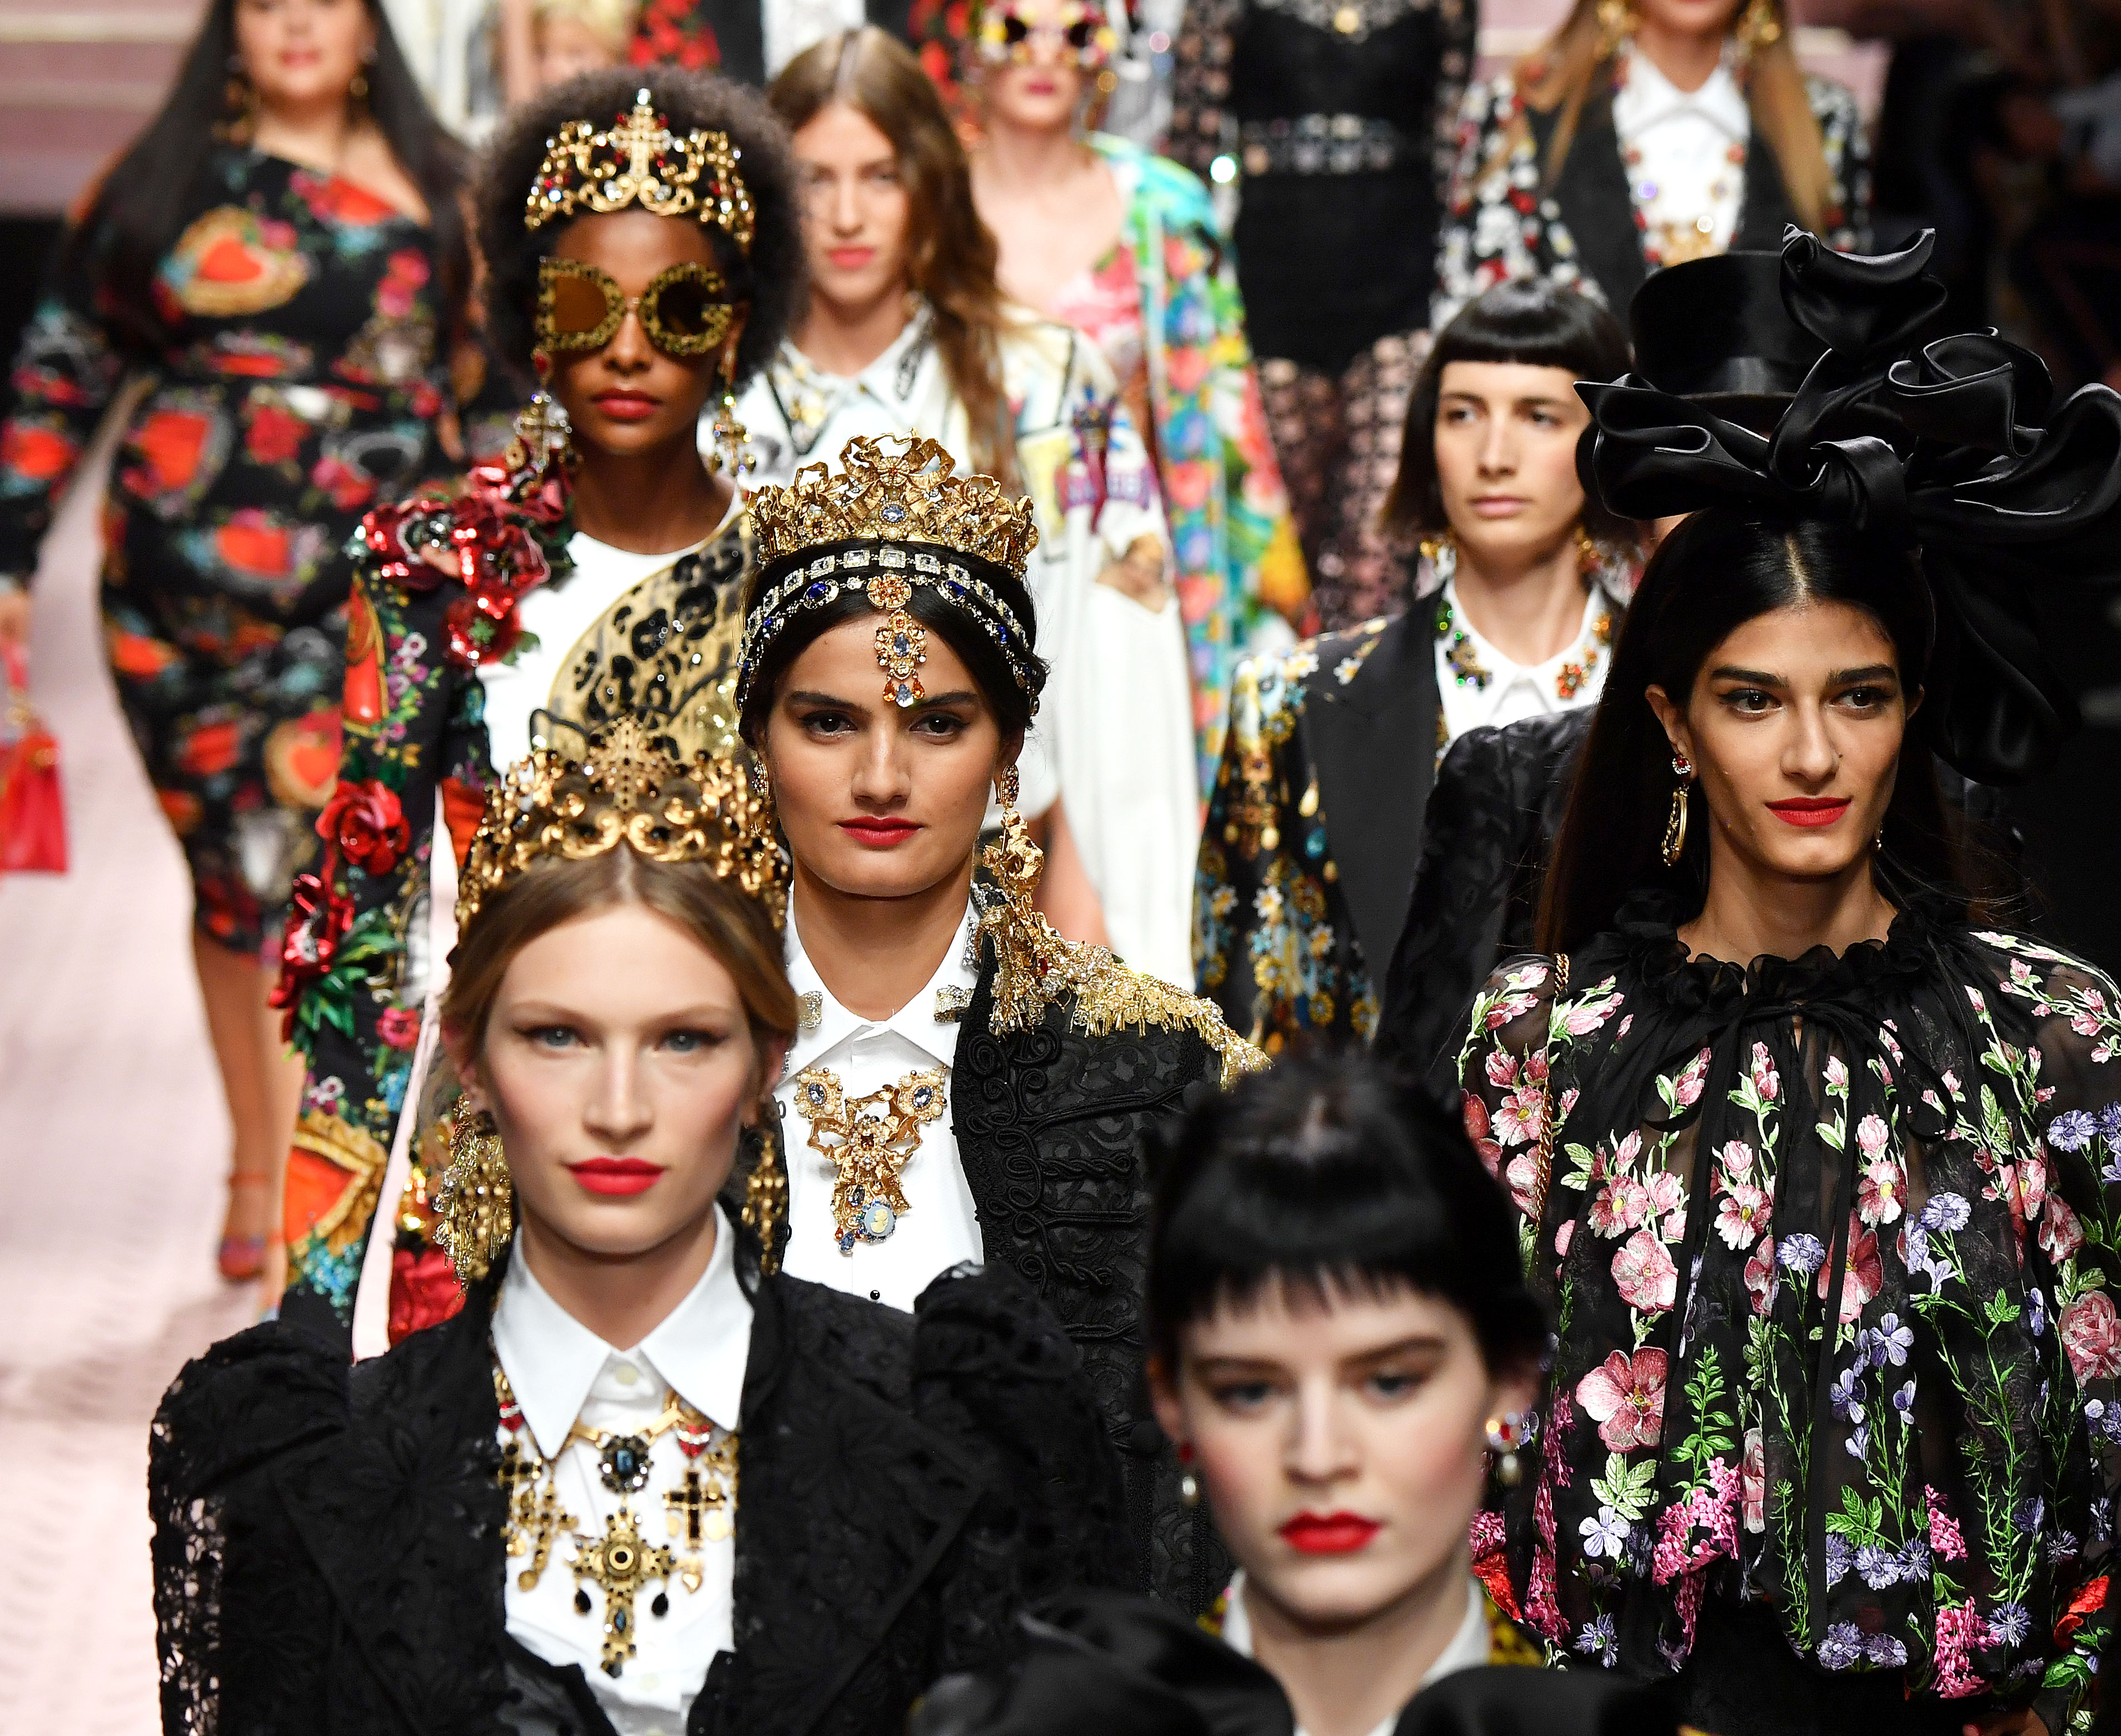 A-List Mini Mes Stormed The Dolce & Gabbana Catwalk